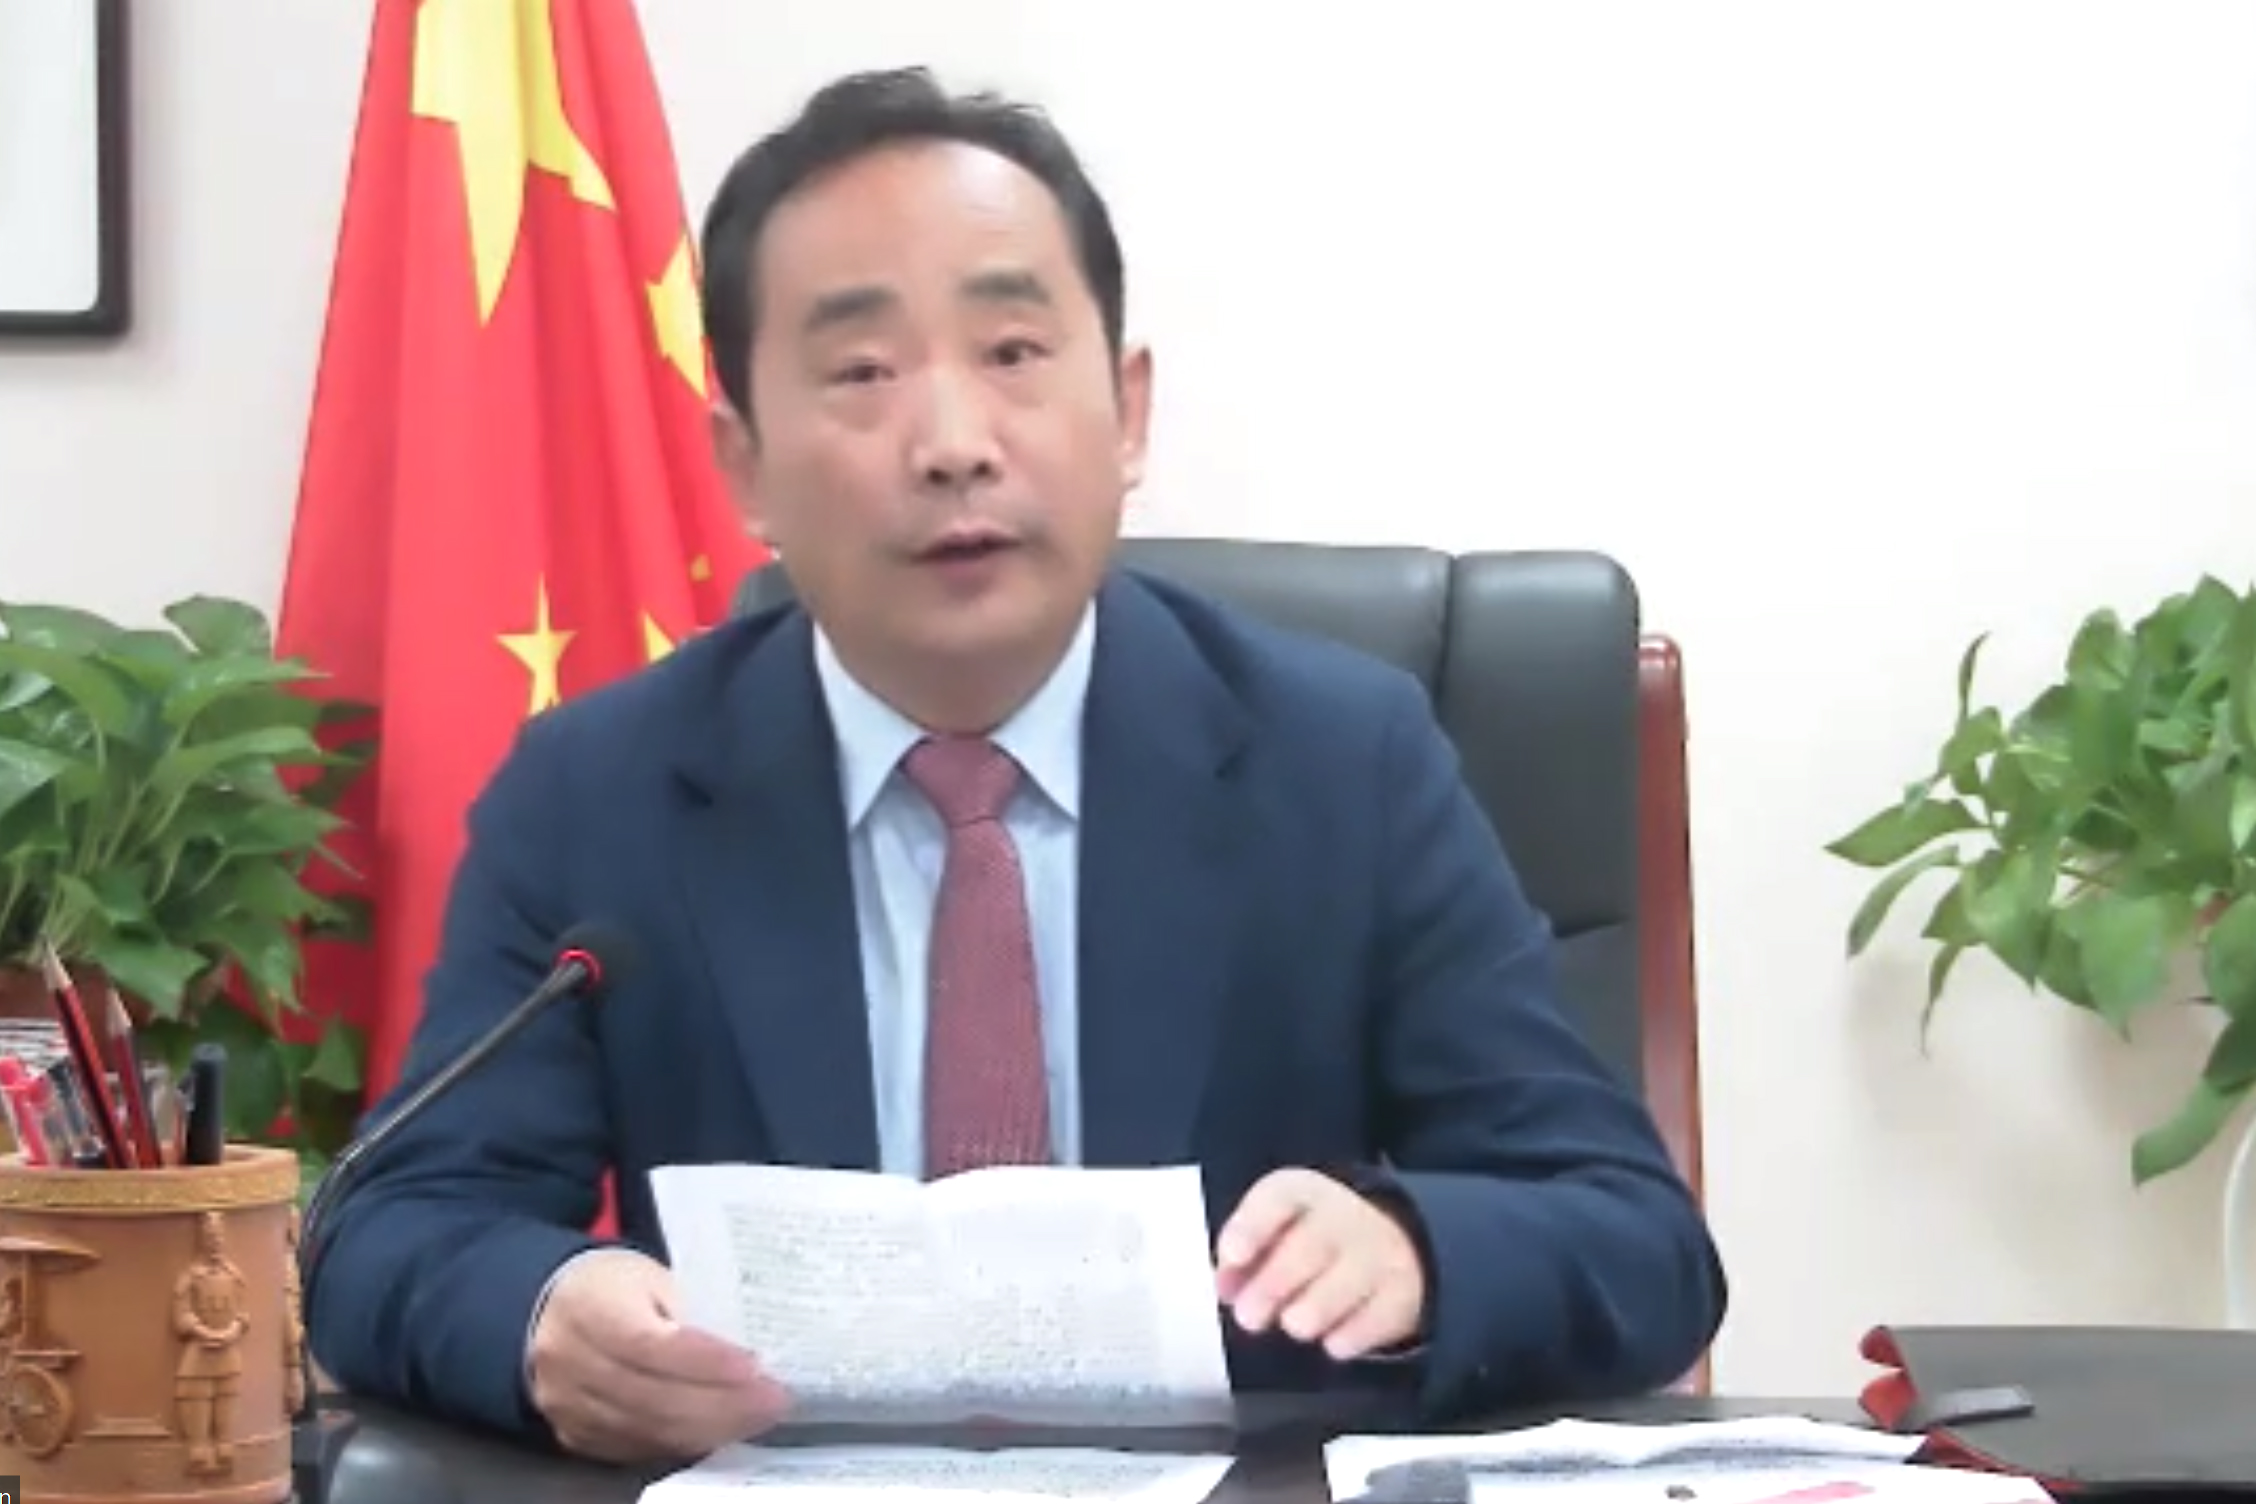 Li Mingyuan, Mayor of Xi’an, China, UCLG Co-President